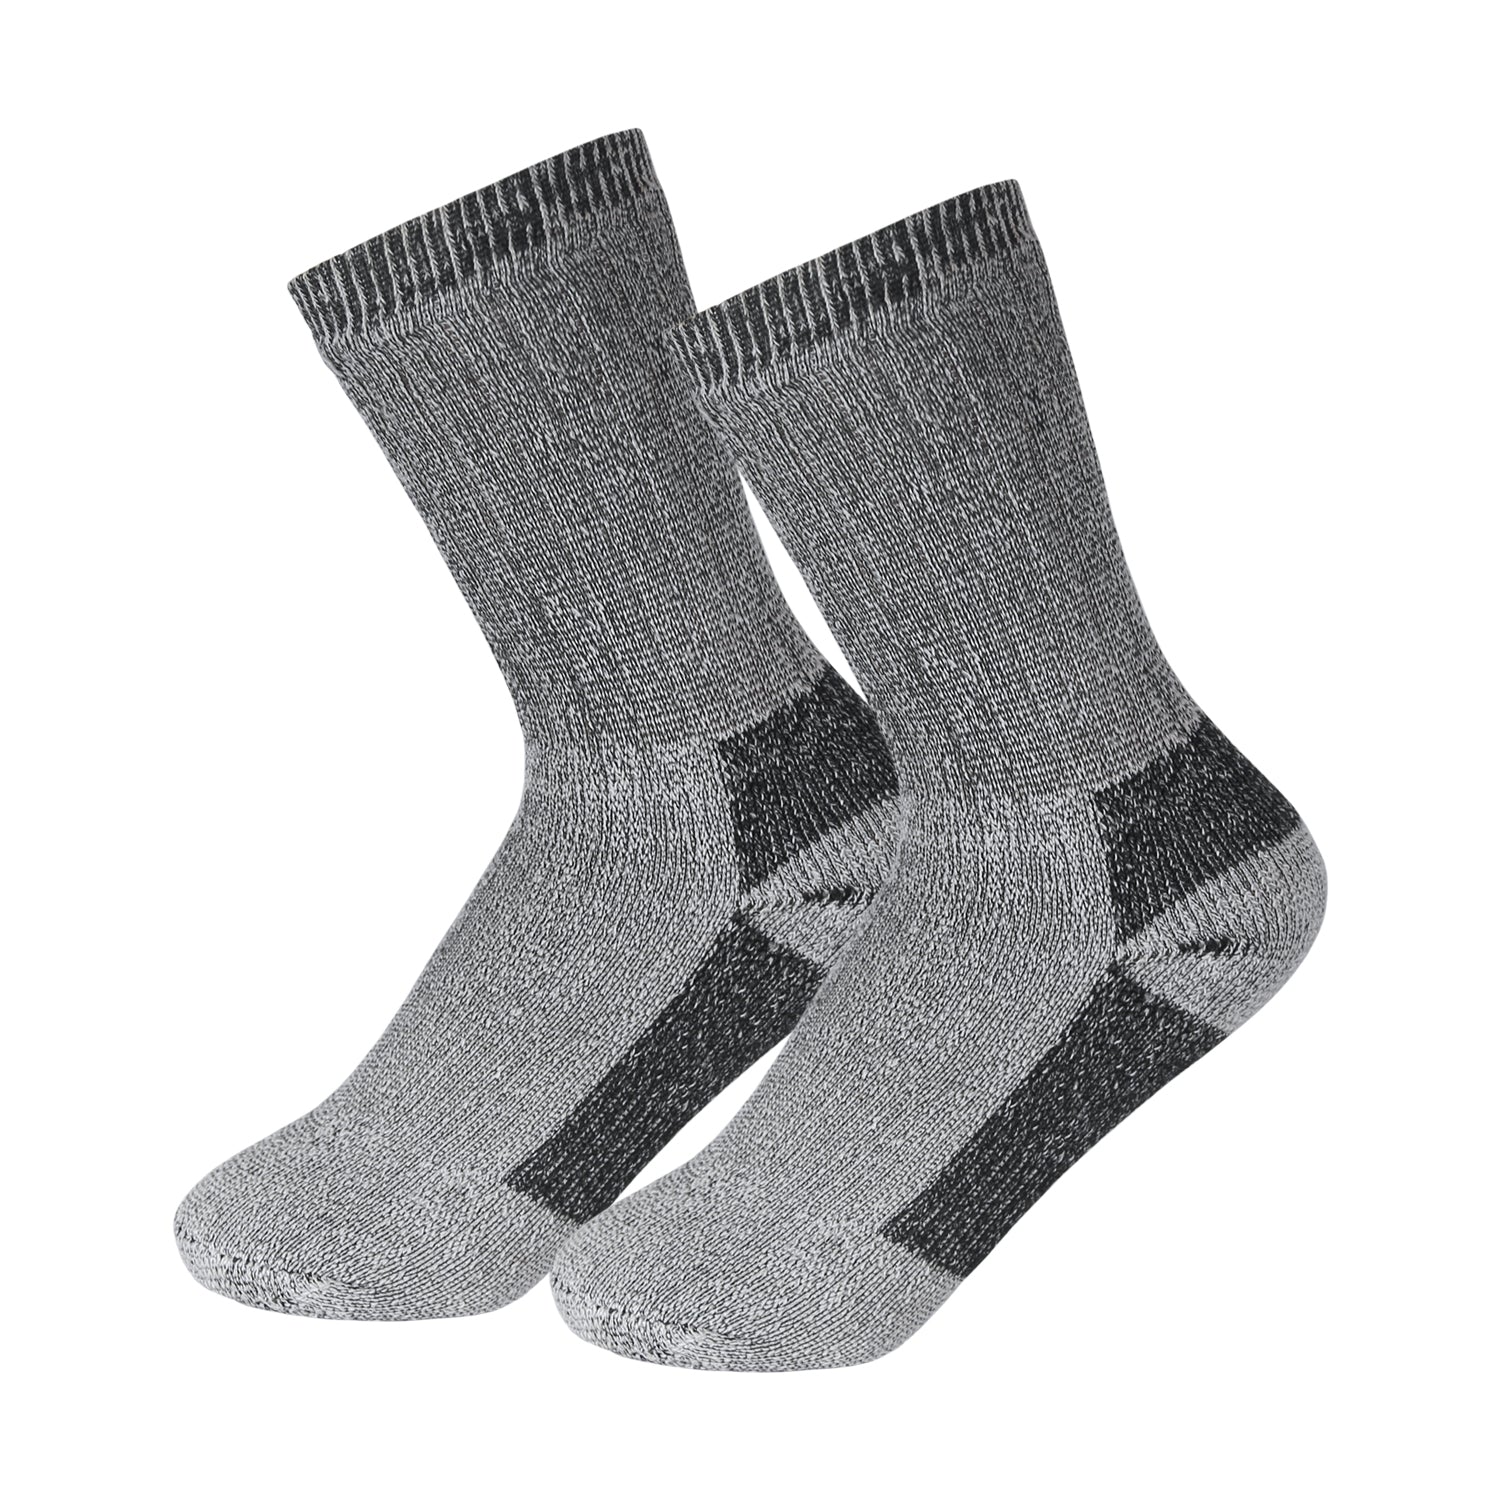 Kids Merino Wool Thermal Hiking Winter Socks